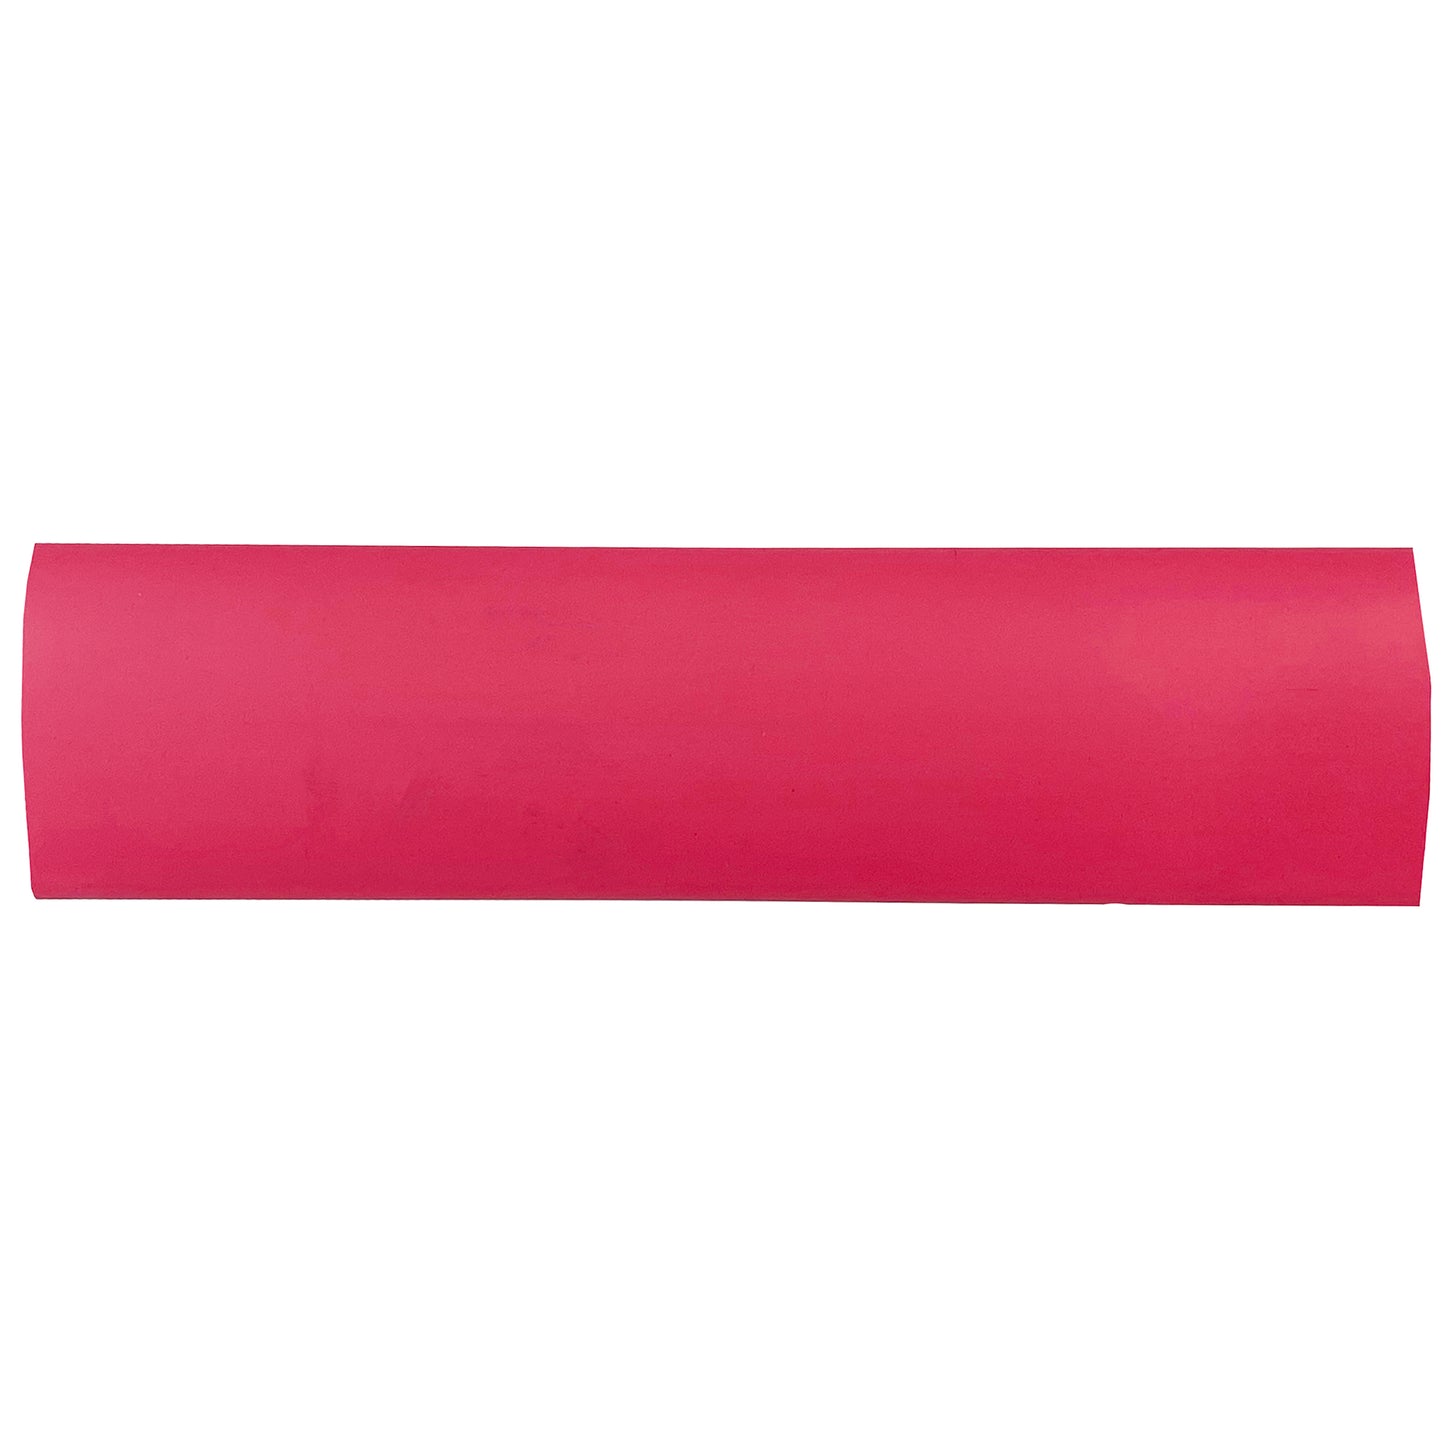 Flexible Thin Single Wall Non-Adhesive Heat Shrink Tubing 2:1 Red 1" ID - 25' Ft Spool